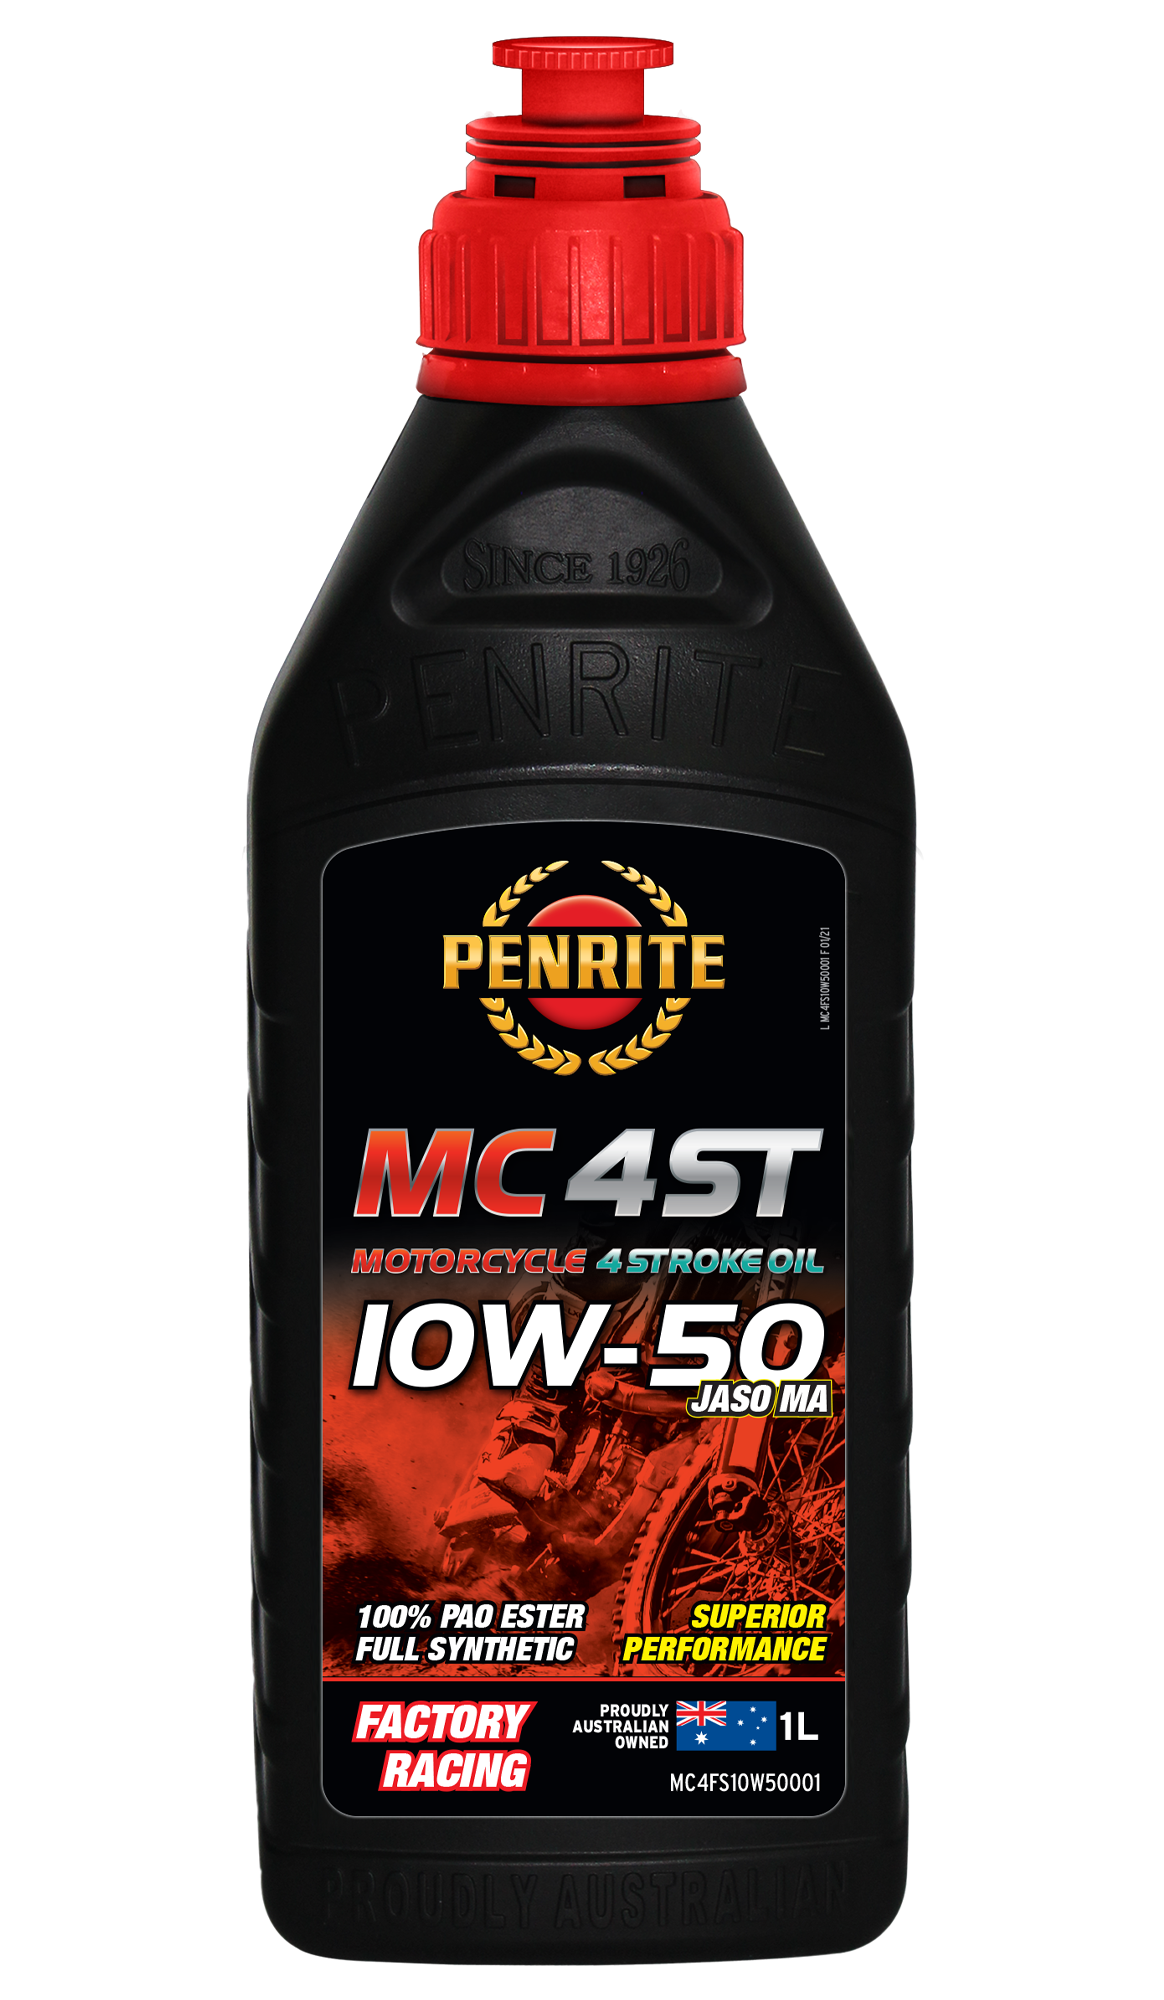 Penrite MC-4ST 10W-50 100% Pao Ester Full Synthetic Engine Oil 1 Litre